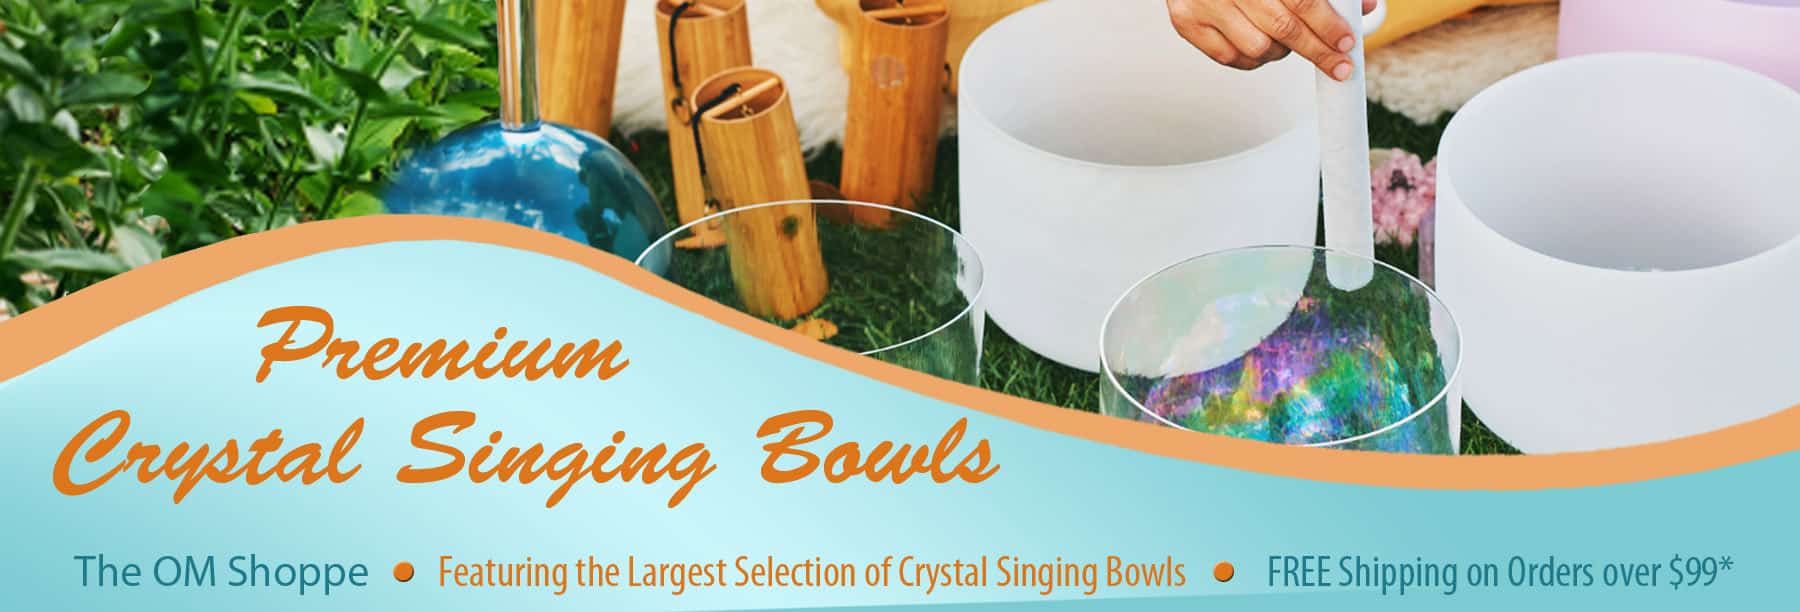 Crystal Singing Bowls - Largest Selection - Premium Quality Singing Bowls